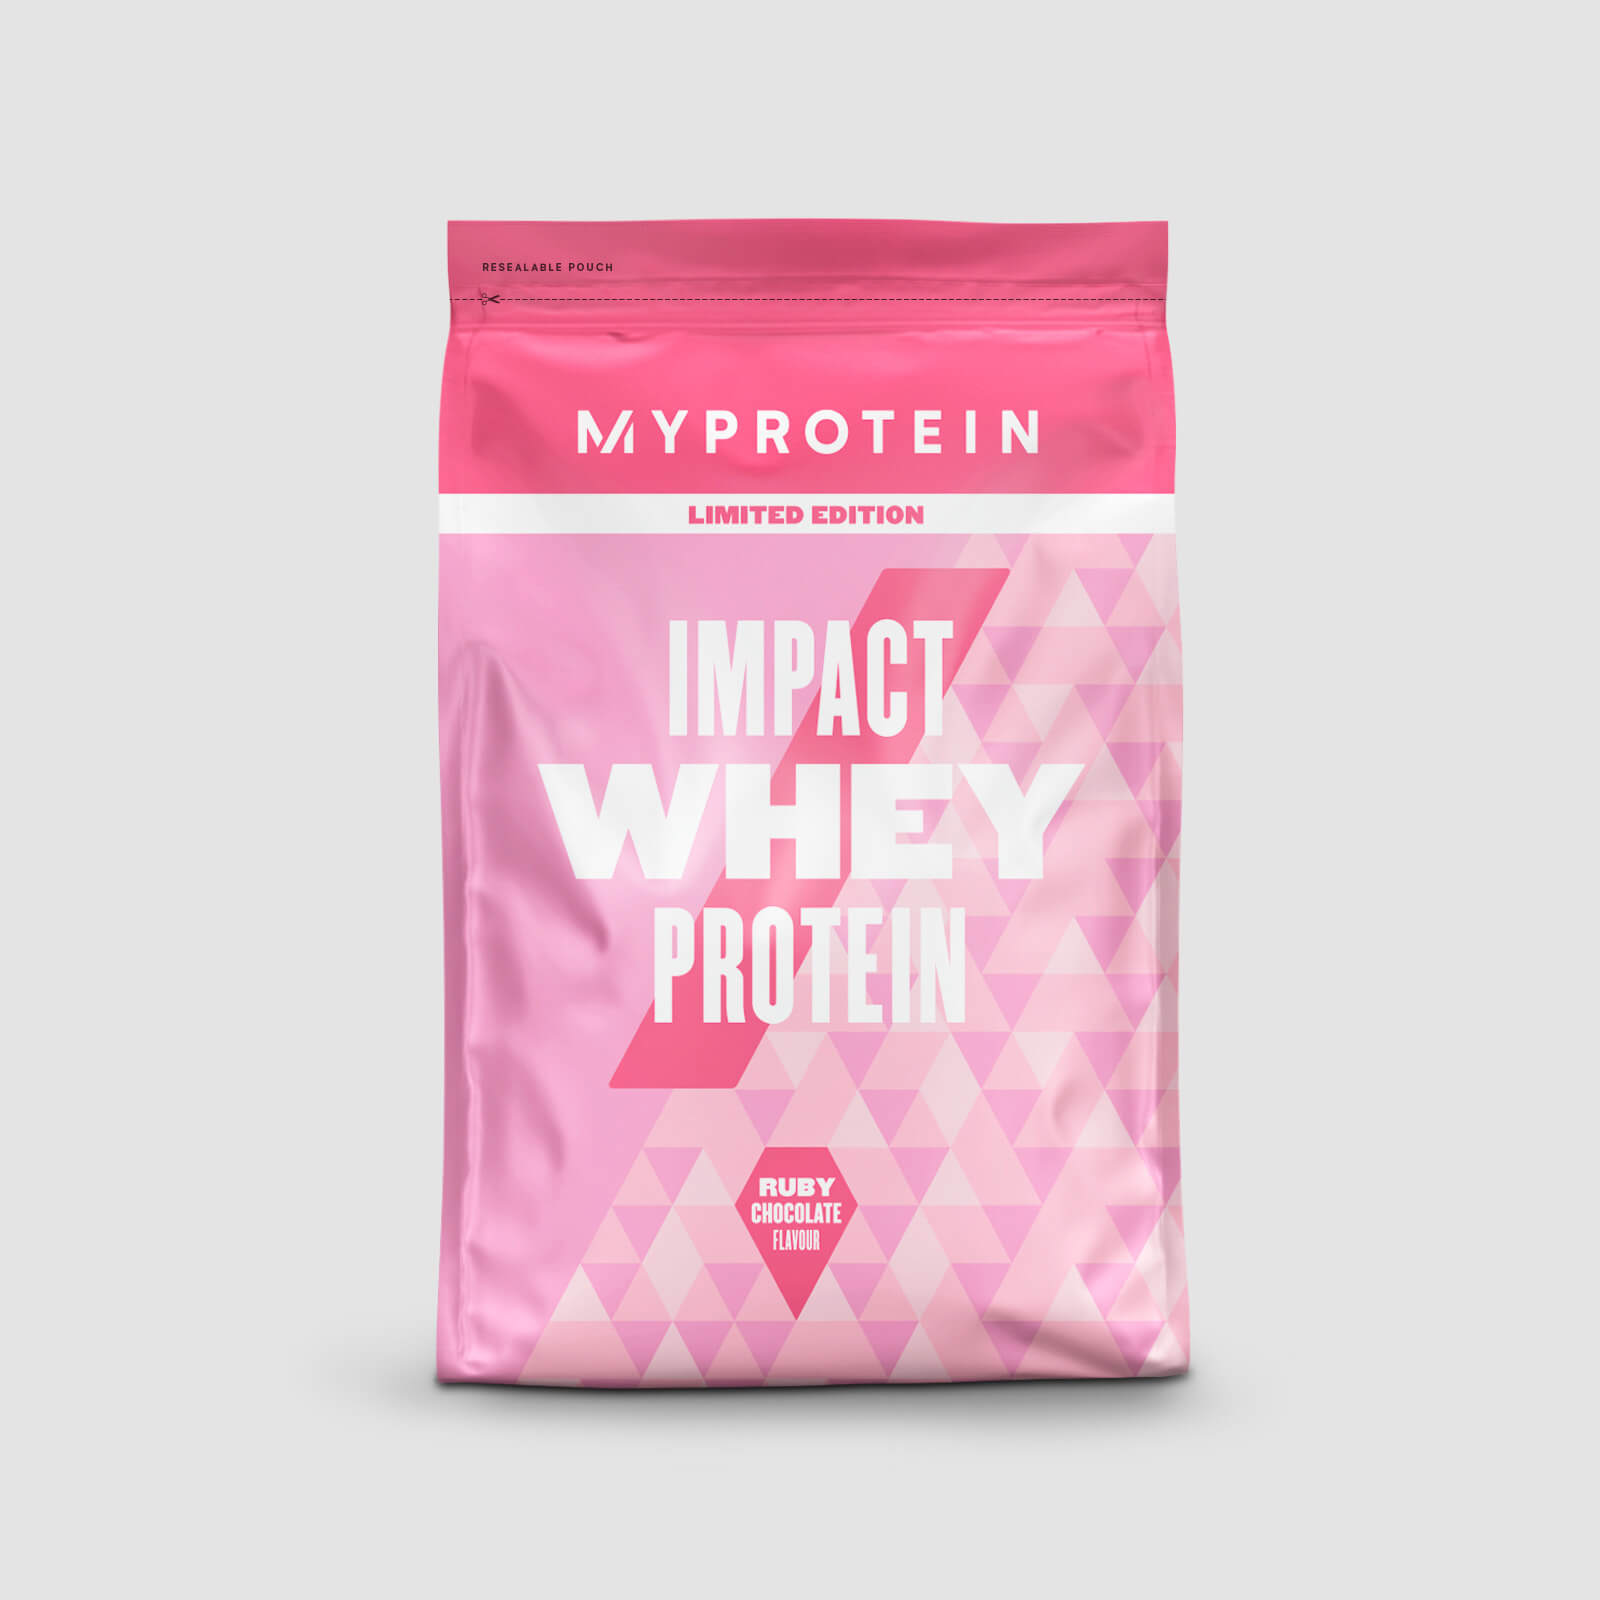 Myprotein Impact Whey Proteín - 250g - Ruby Chocolate